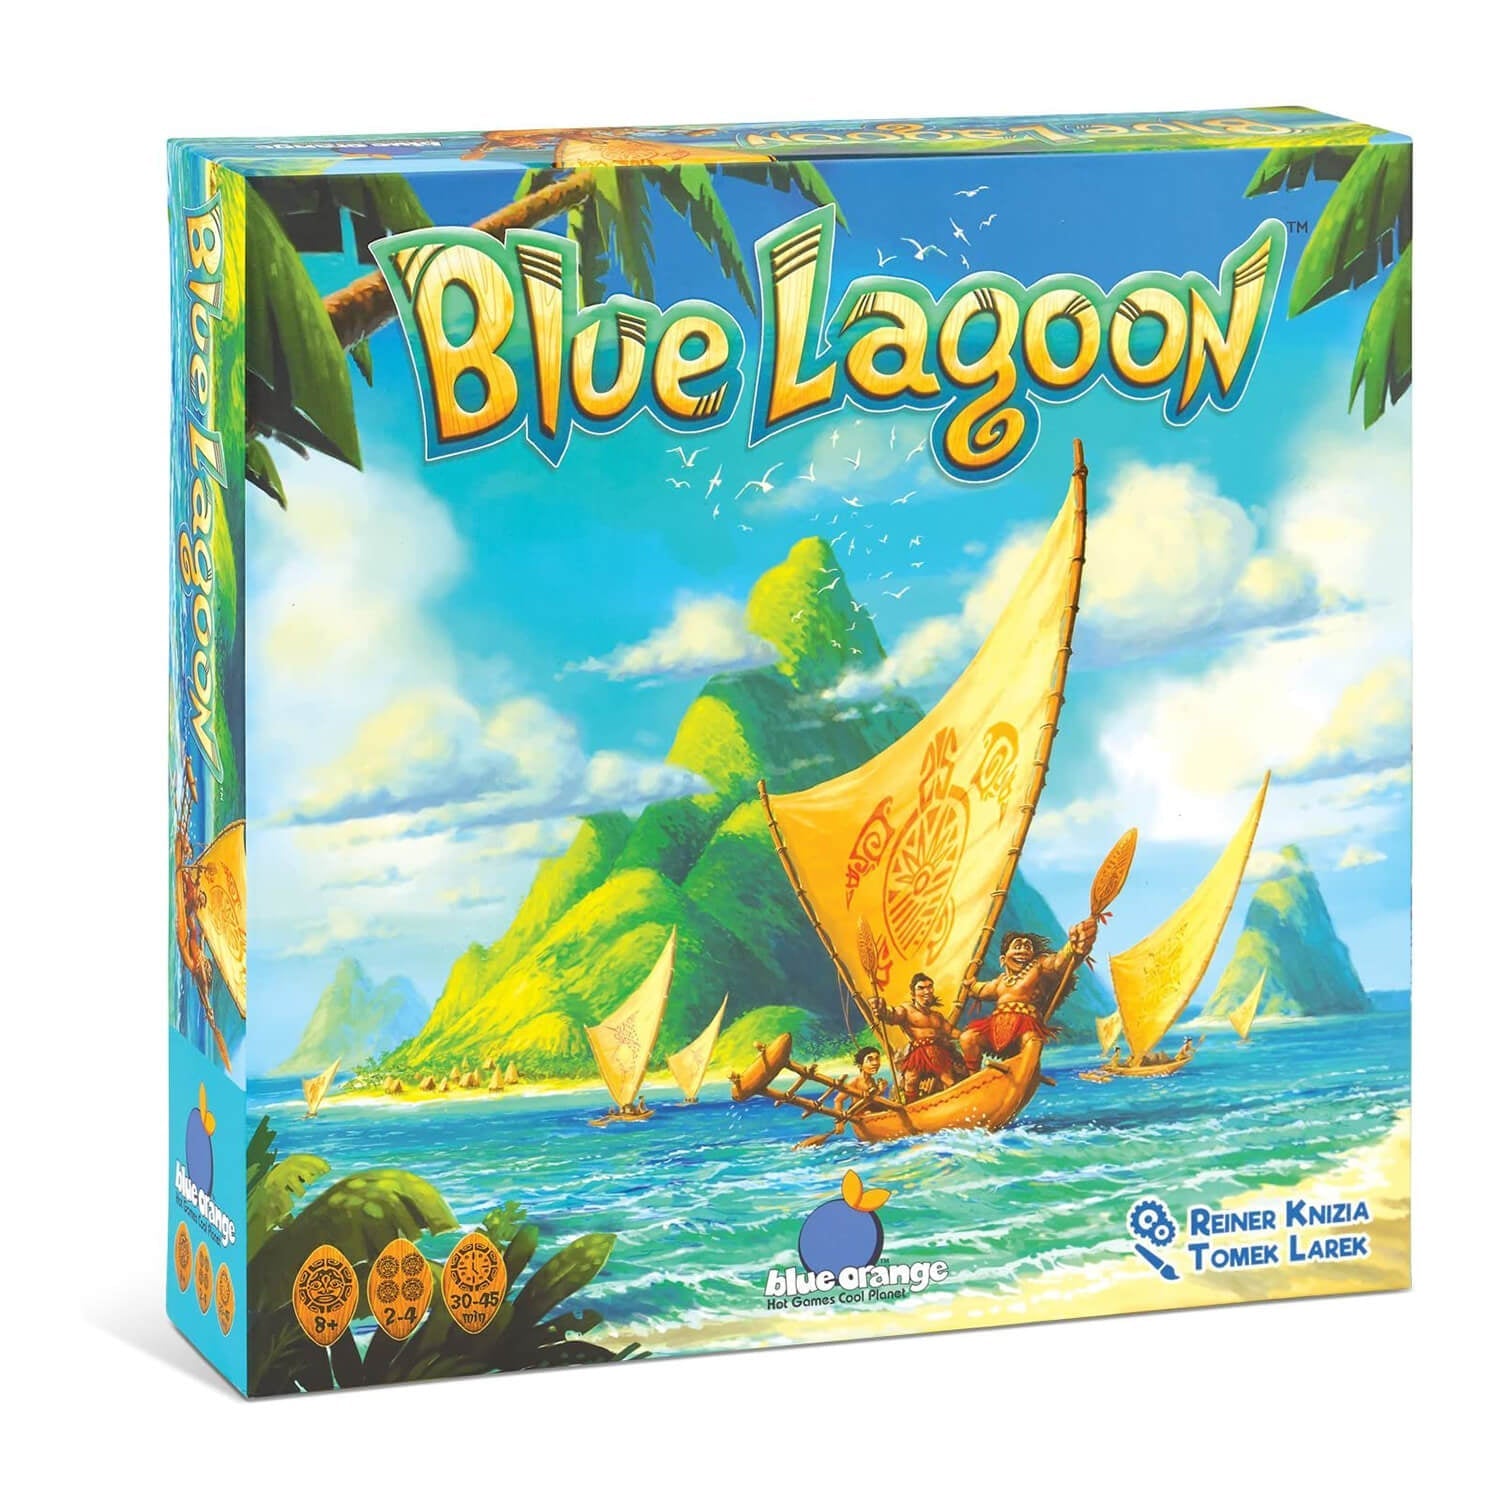 Blue Orange Blue Lagoon Game